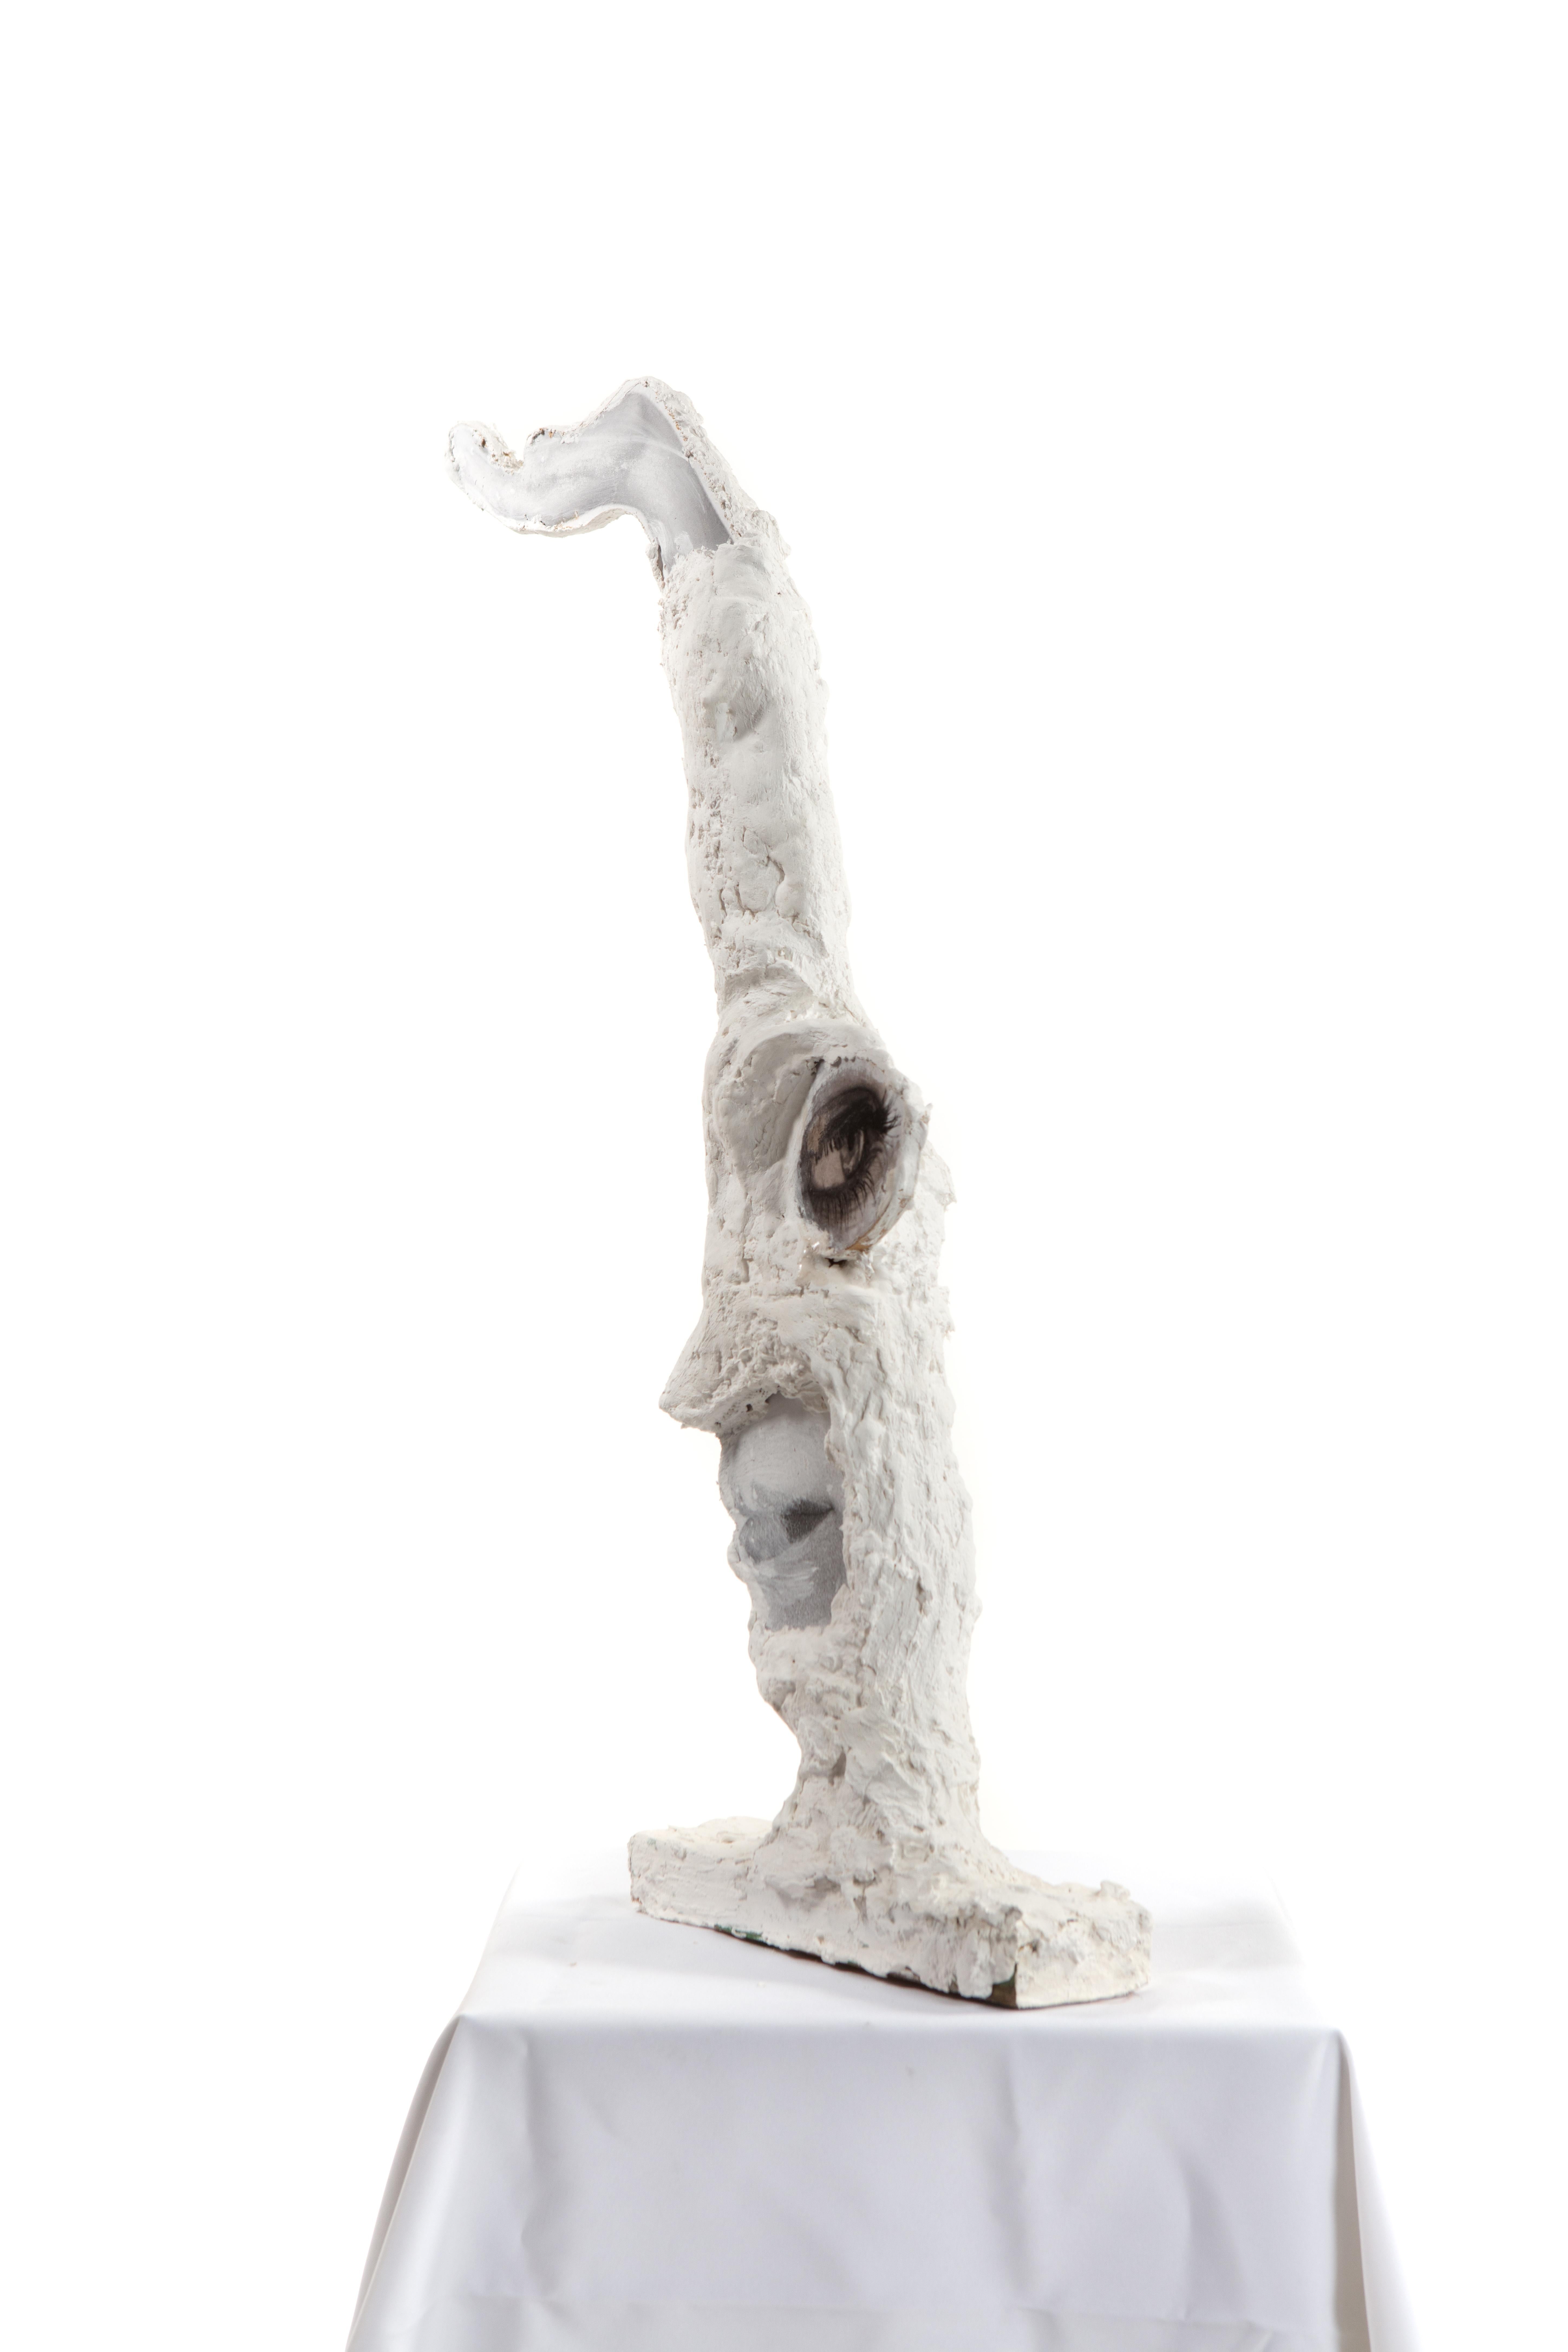 Contemporary White Plaster Sculpture Figure, 21st Century by Mattia Biagi For Sale